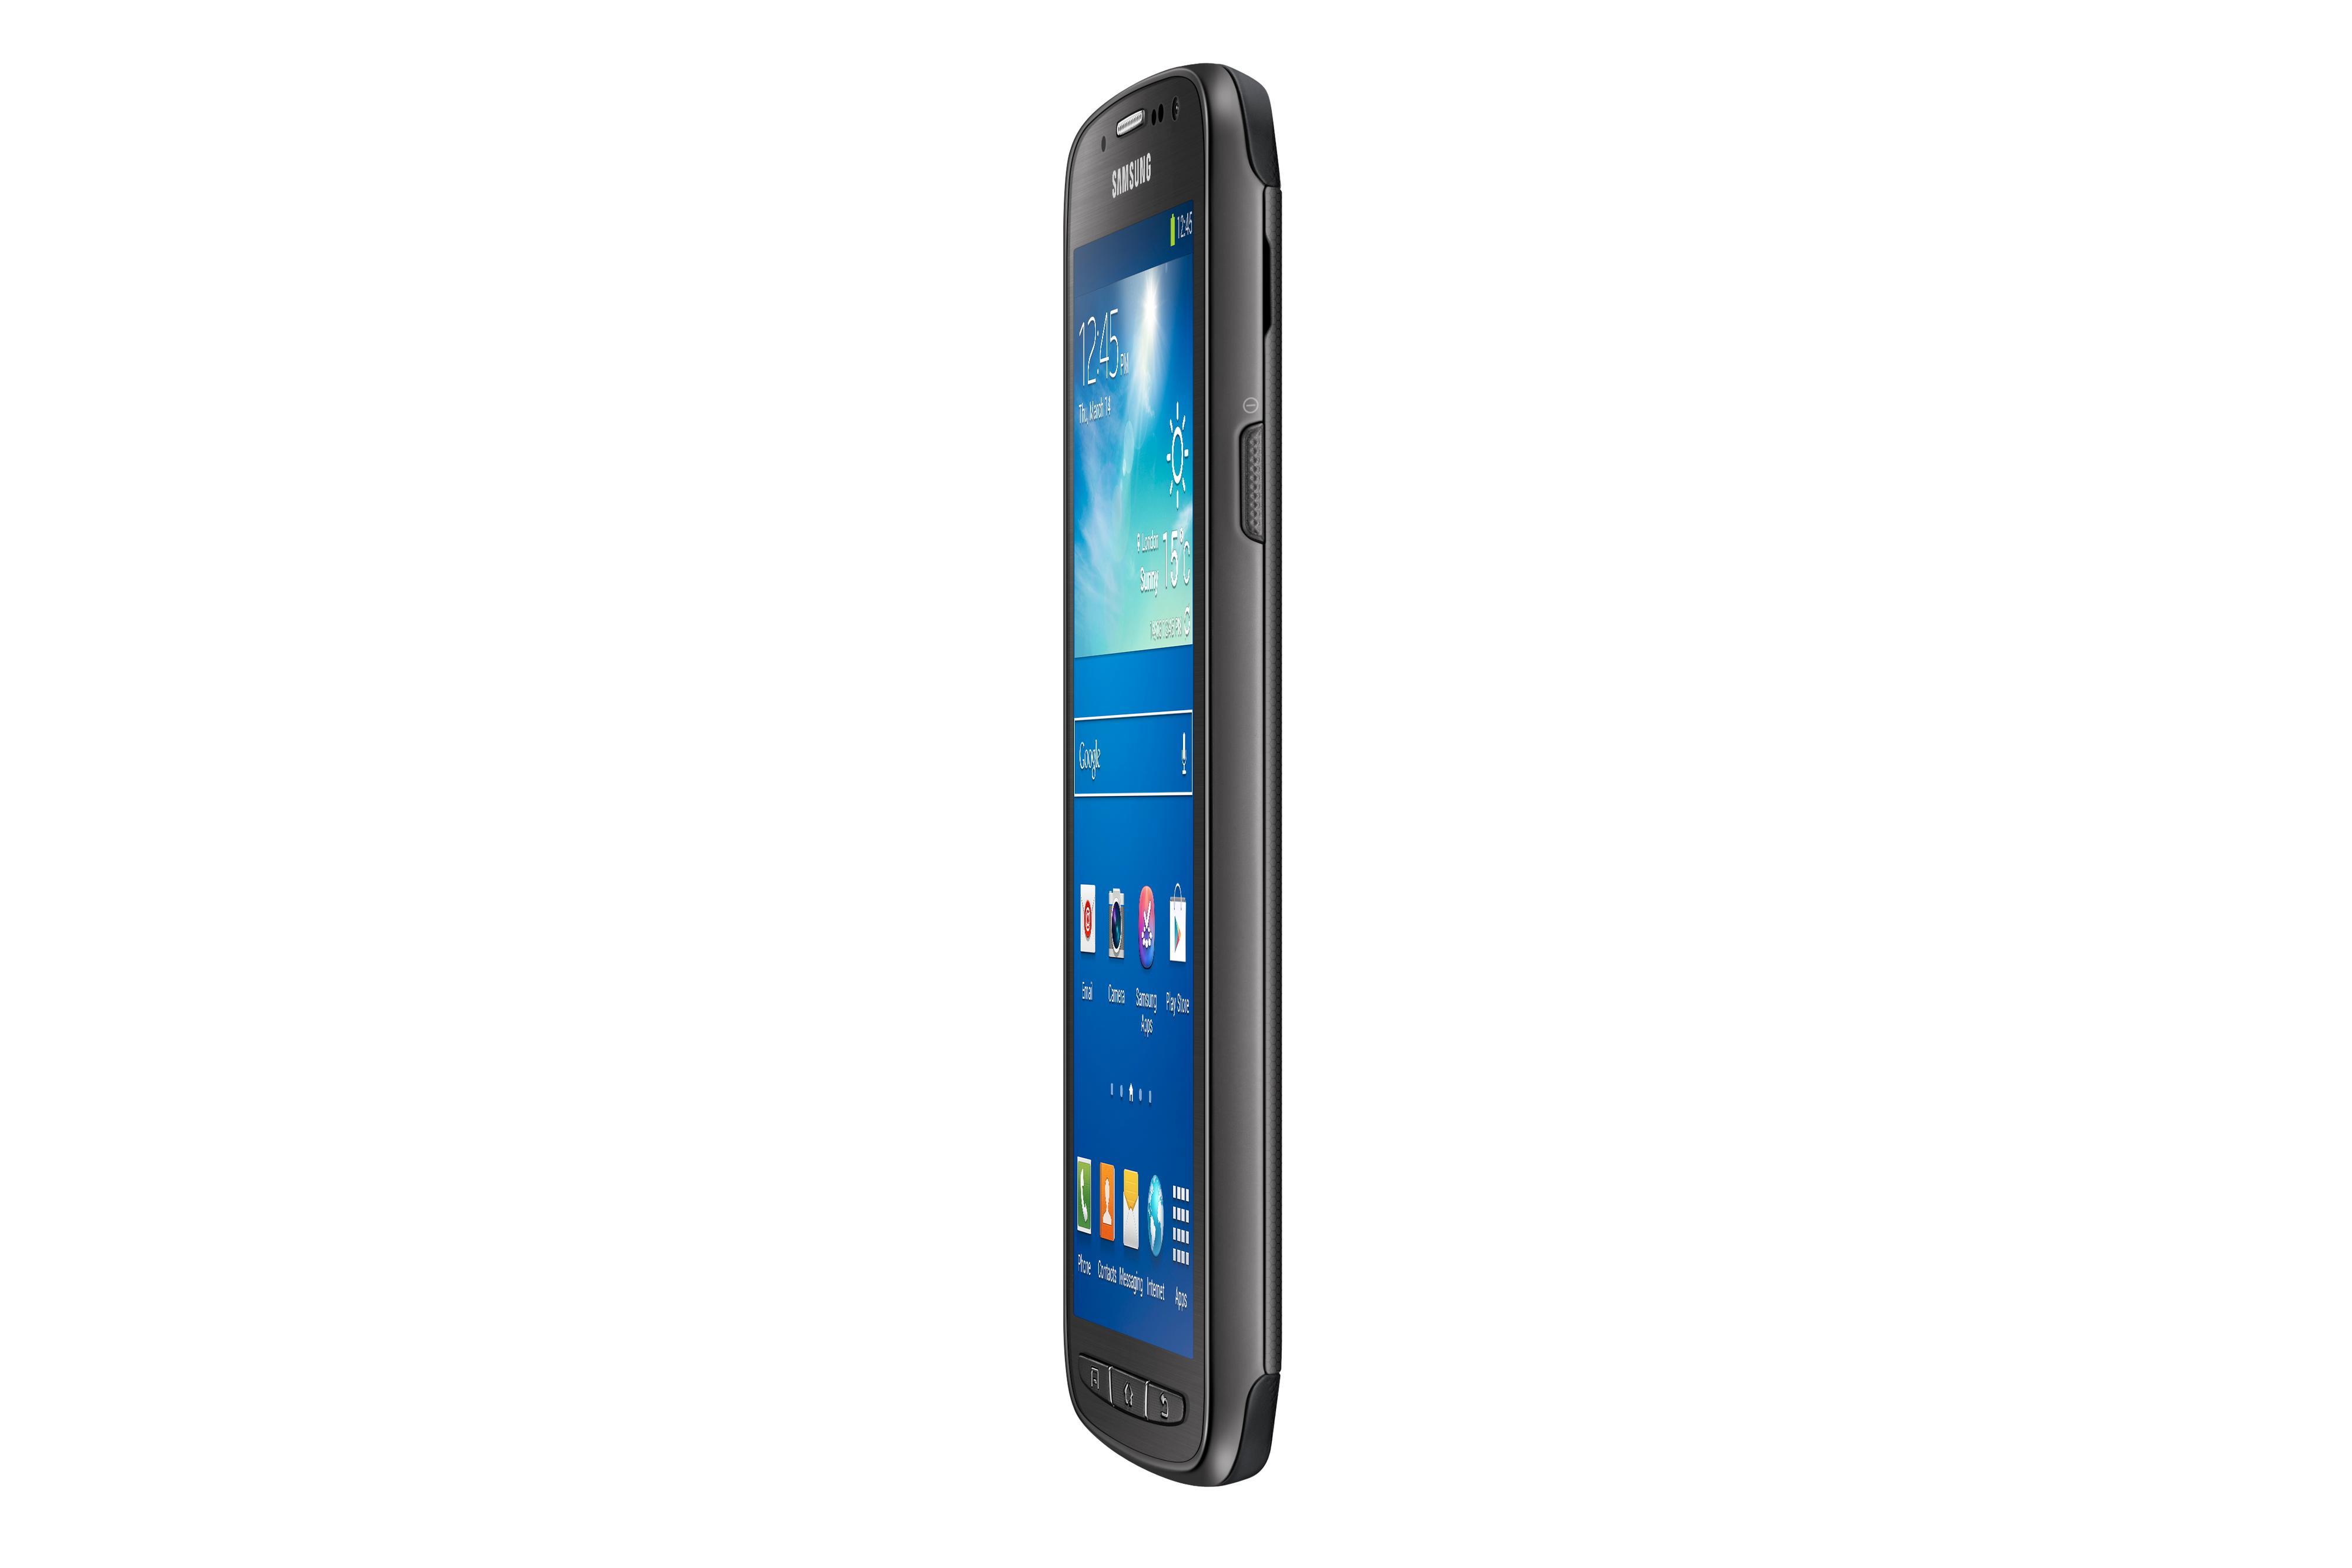 Slik ser Galaxy S4 Active ut fra siden.Foto: Samsung